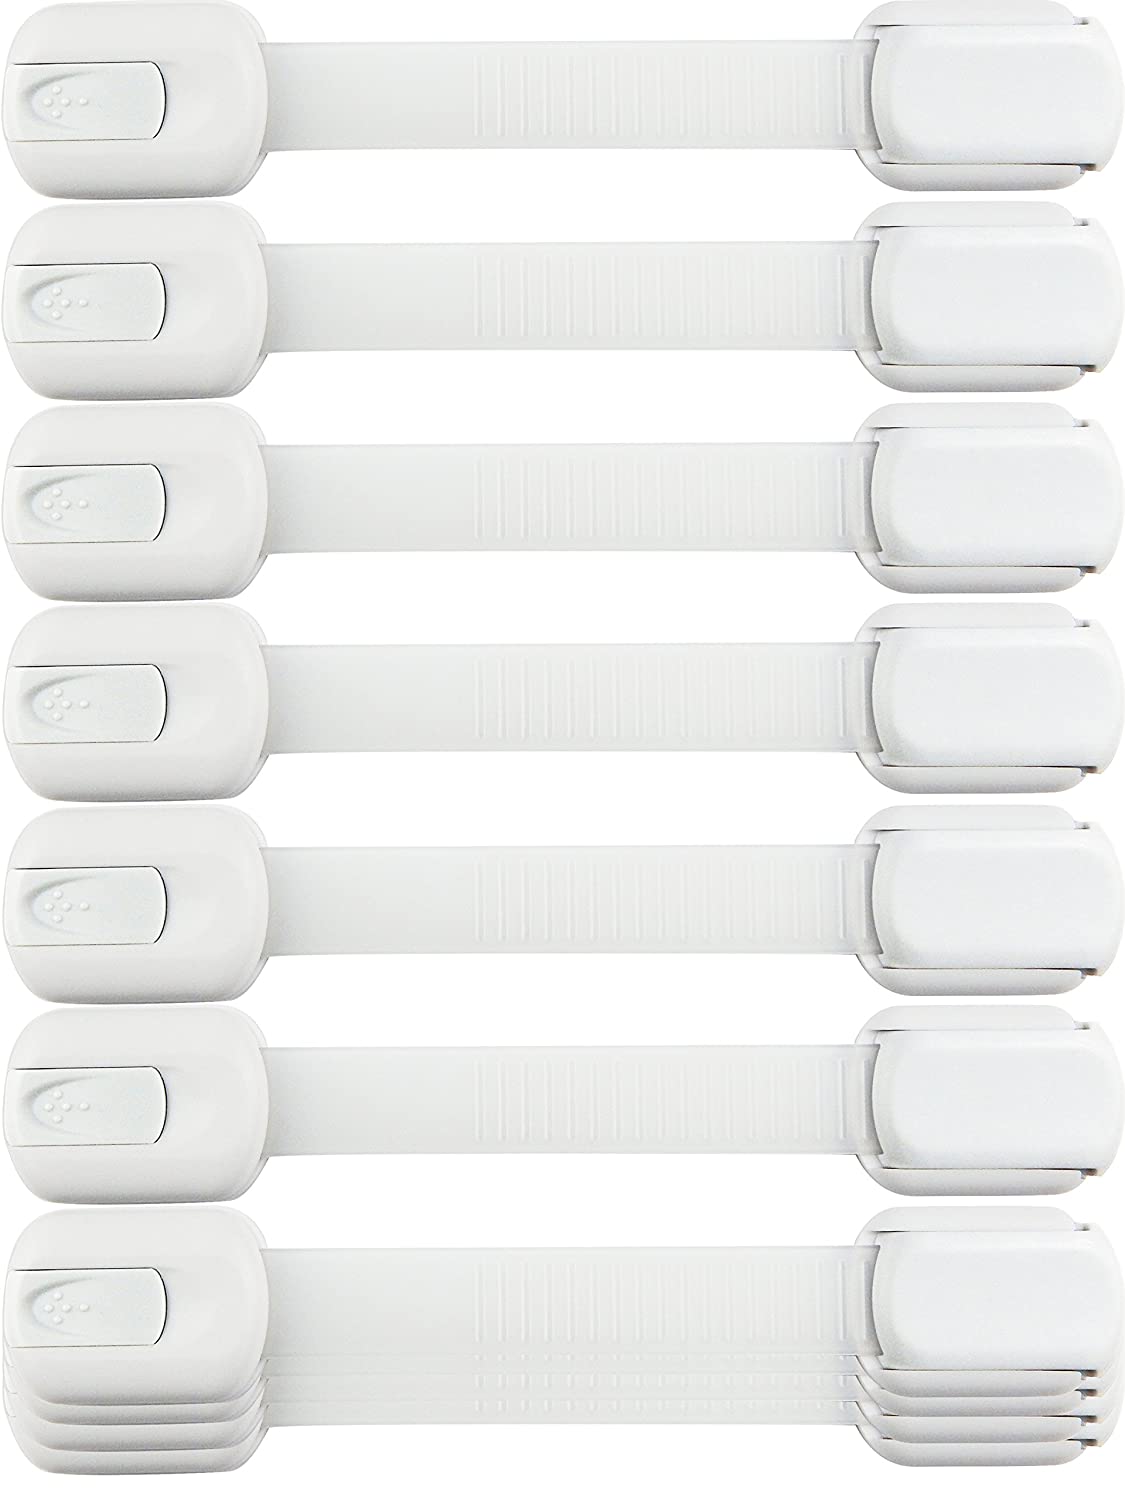 Babeniq Cupboard Safety Locks for Babies, 10 Pack Adjustable Strap Locks